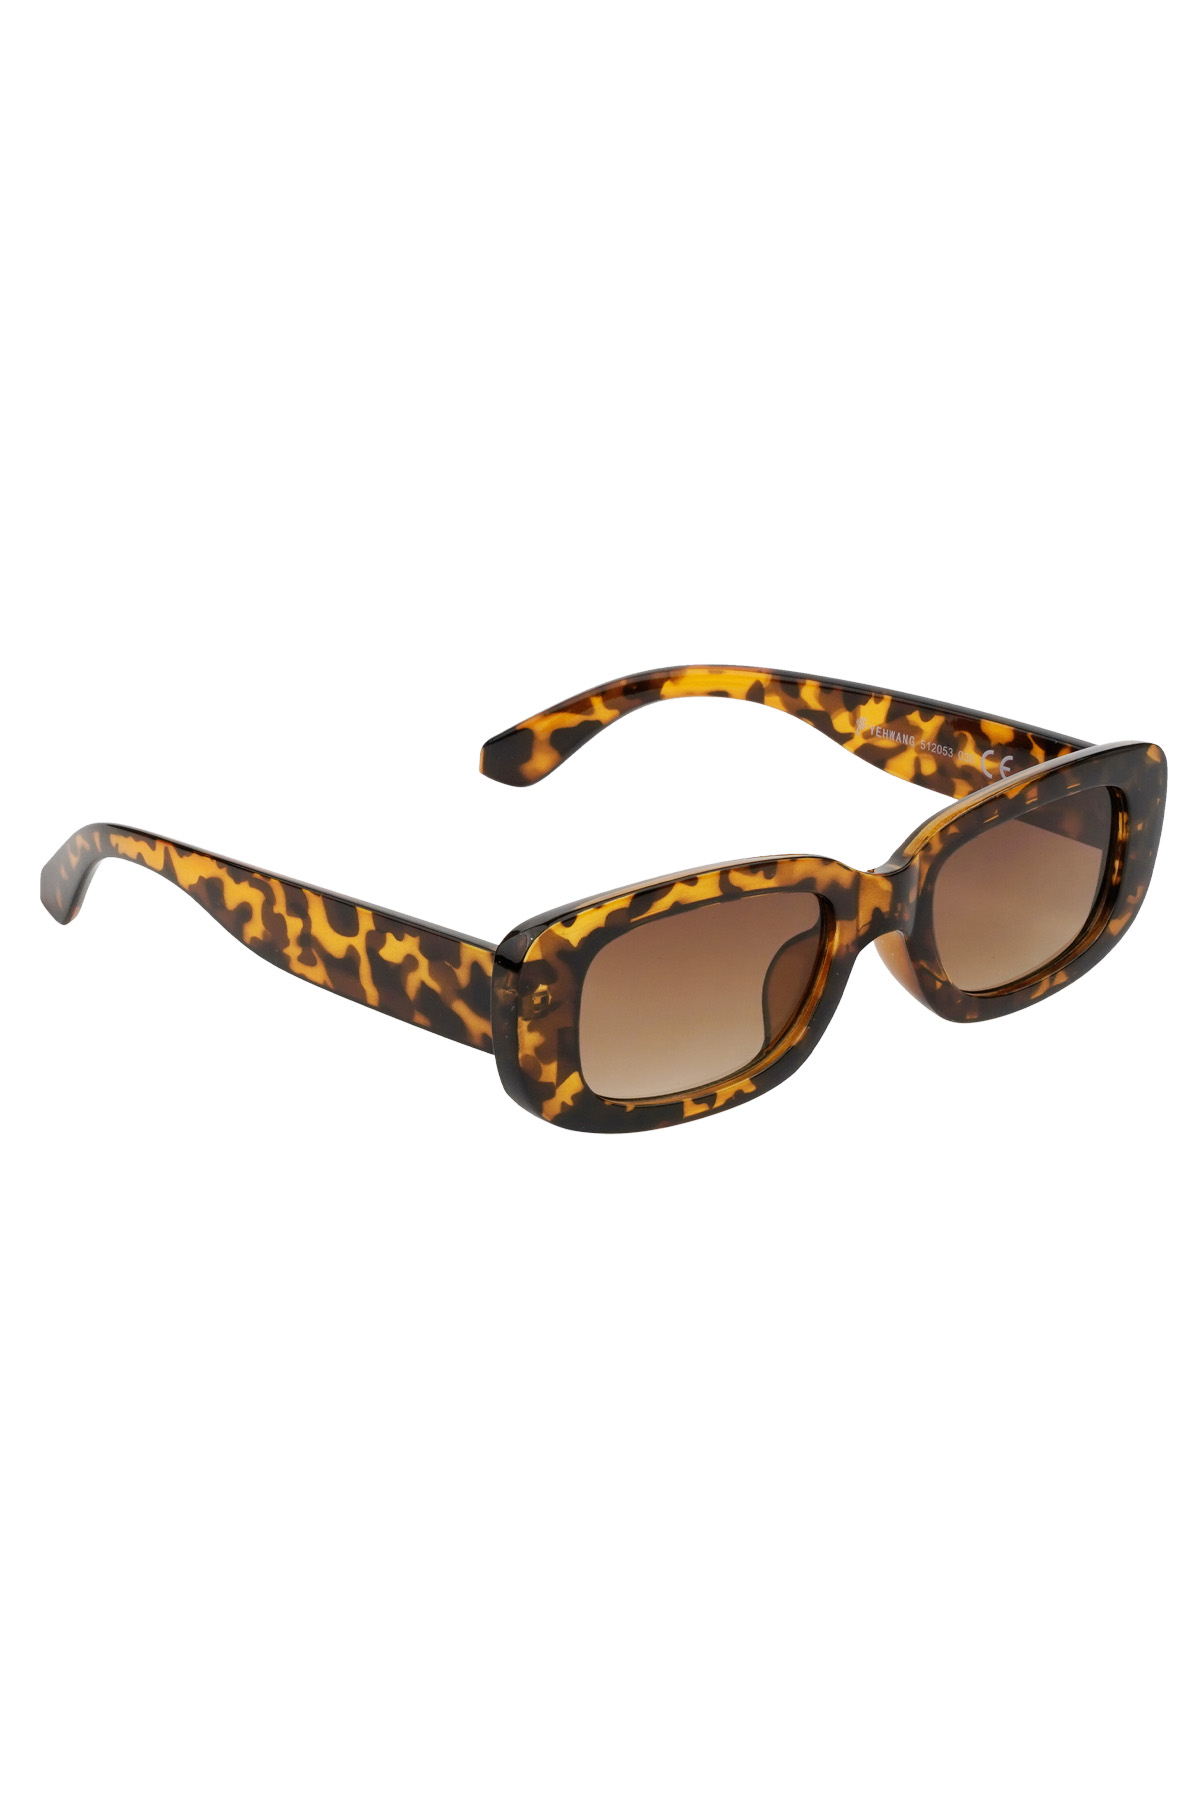 Simple retro sunglasses - brown h5 